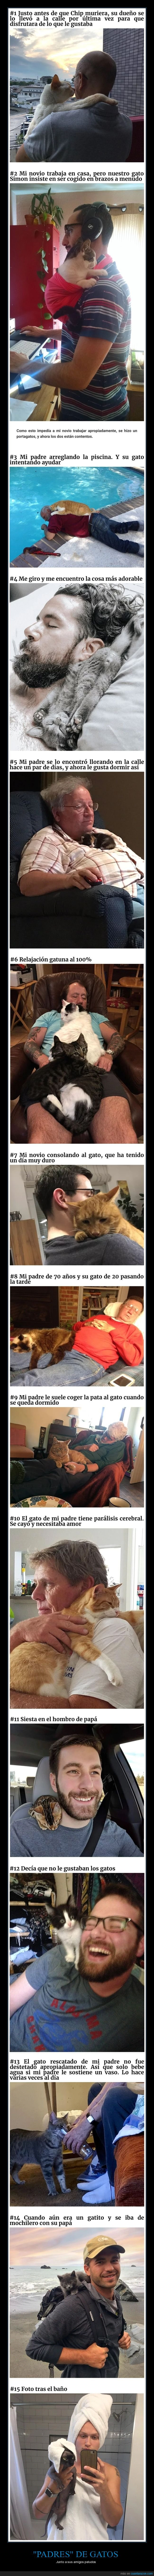 gatos,padres